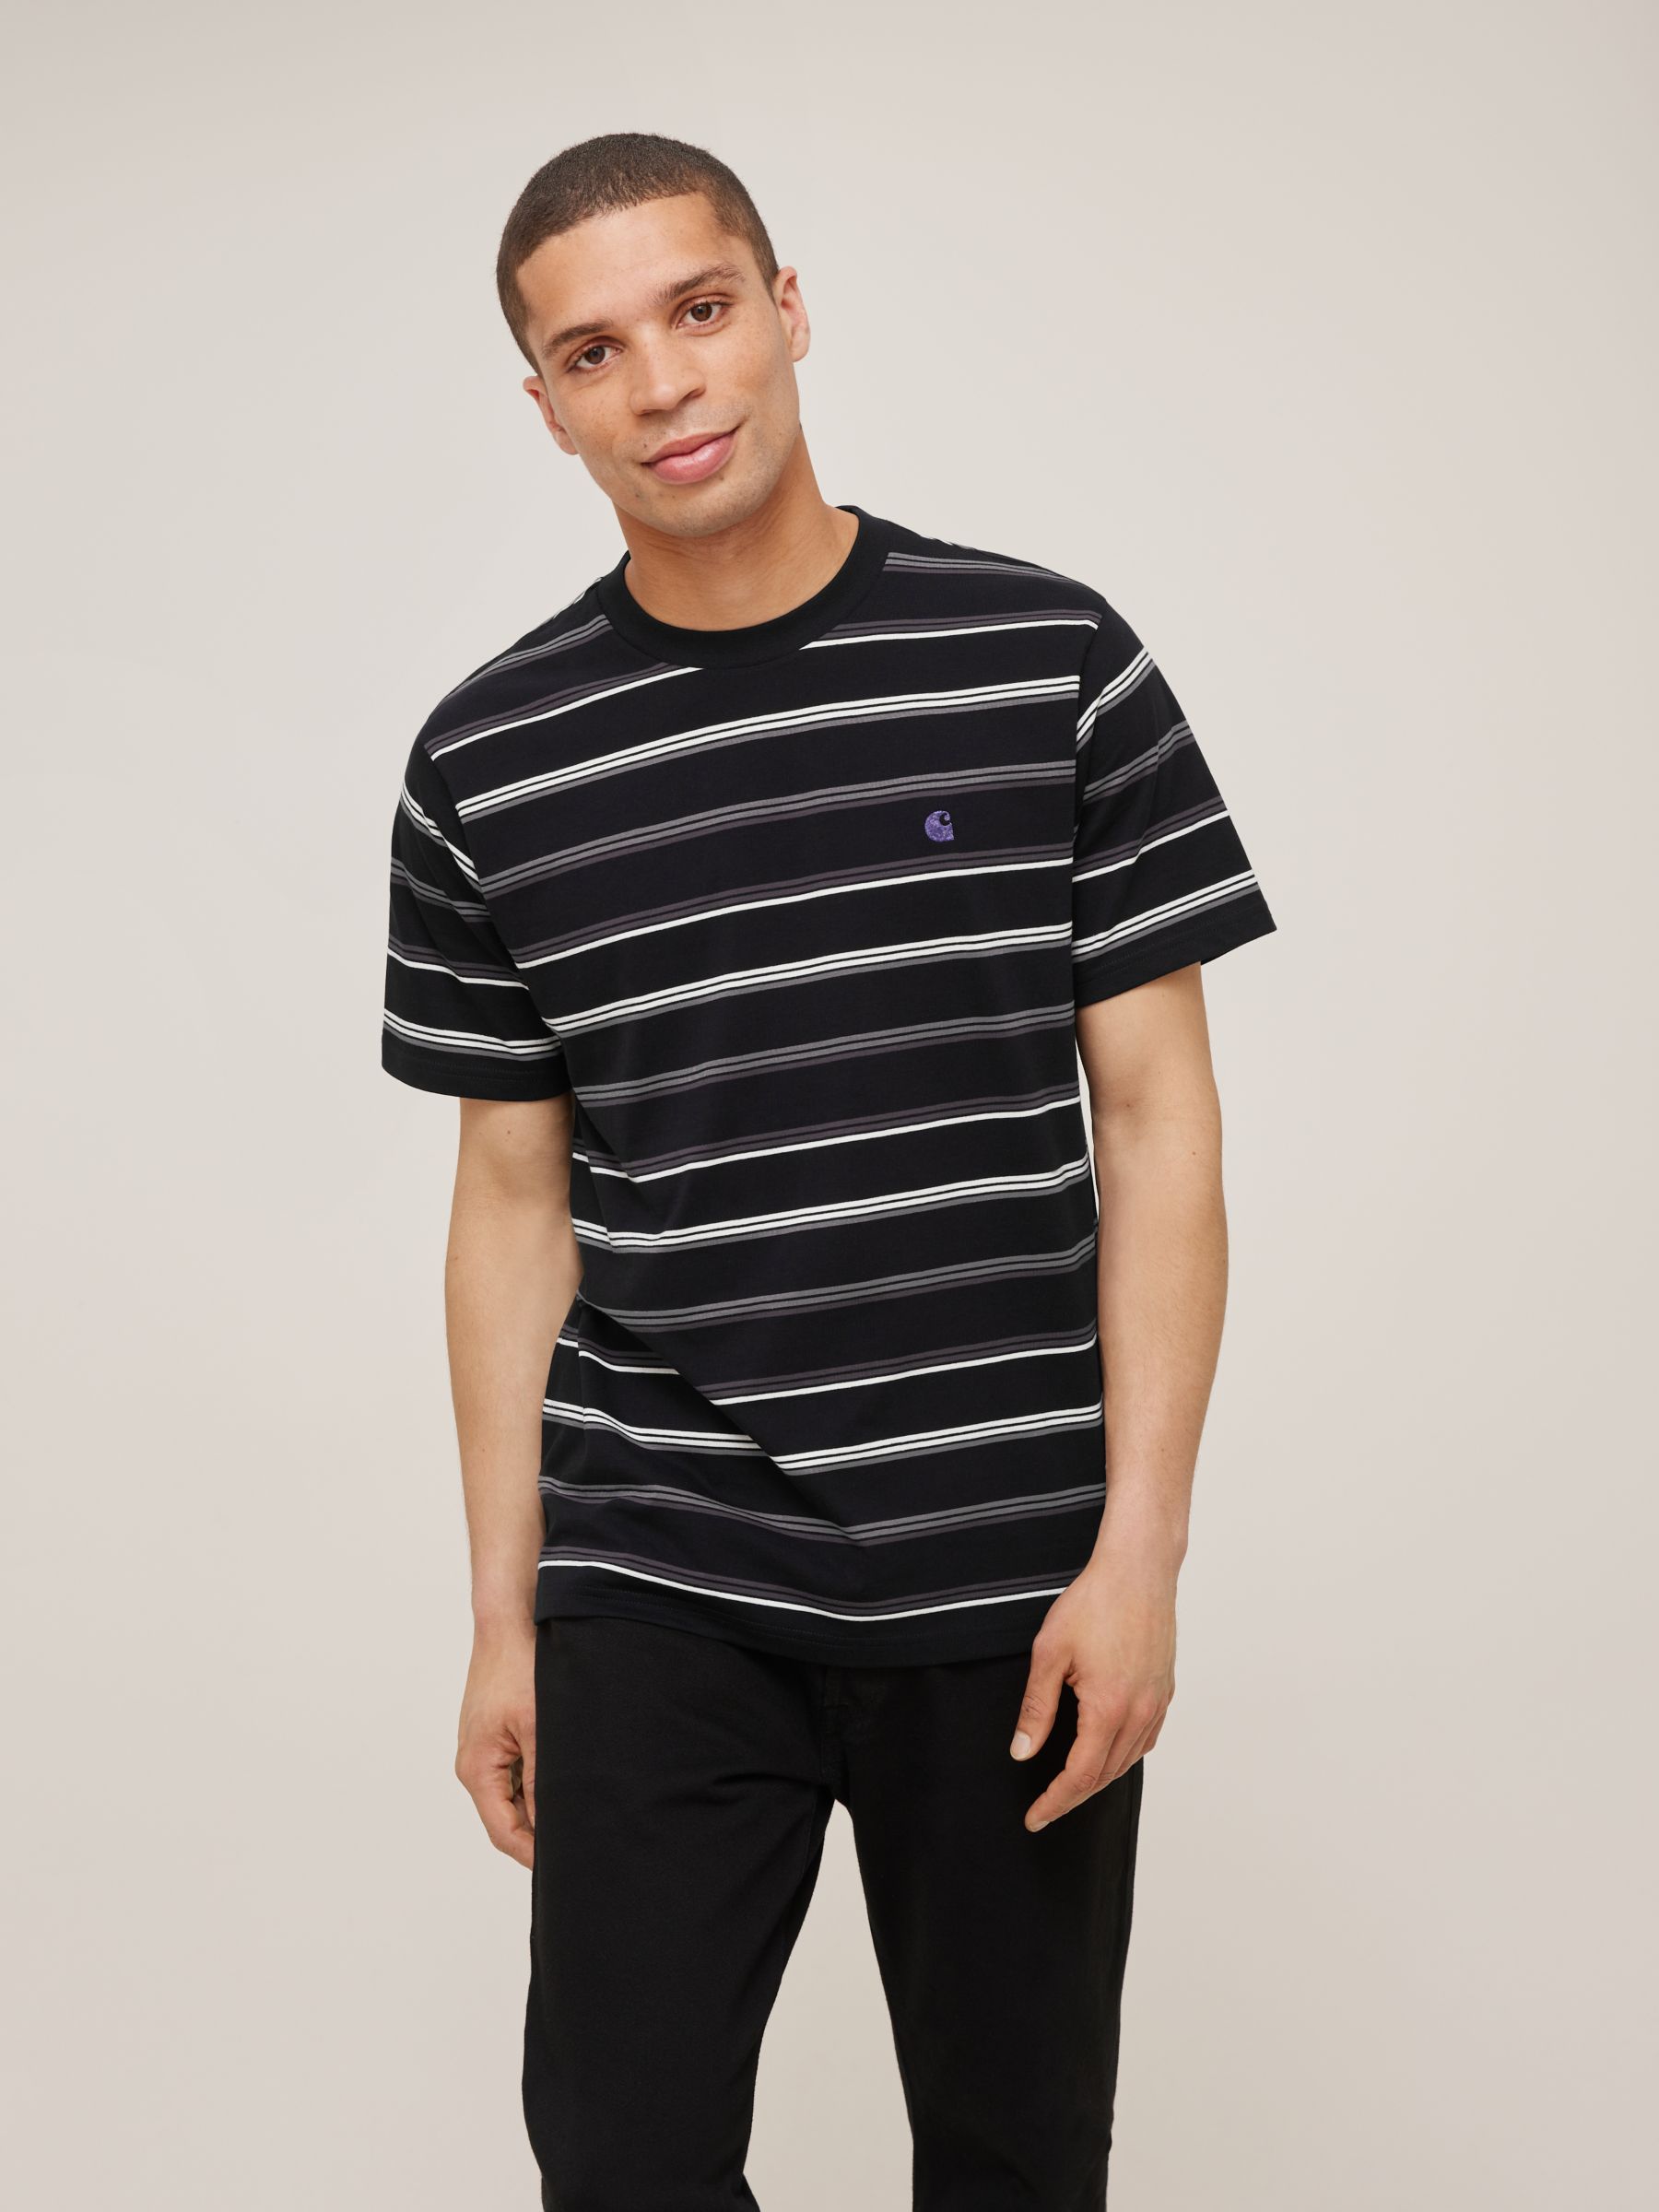 Carhartt WIP Vonn Striped T-Shirt, S